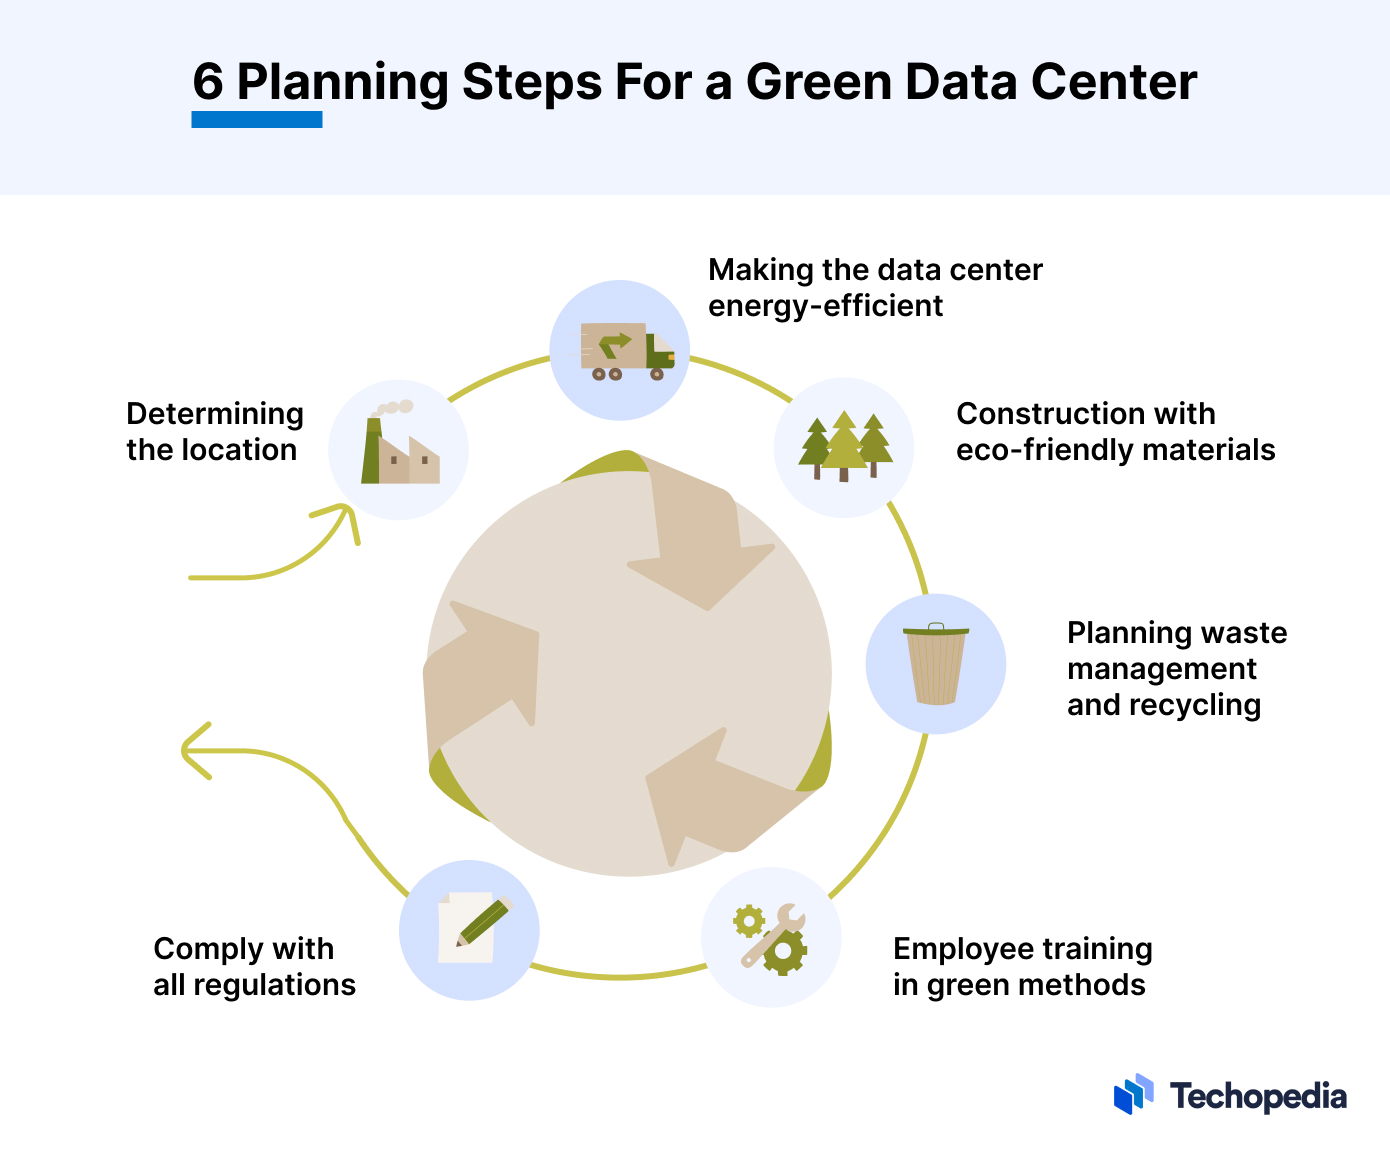 6 Planning Steps For a Green Data Center